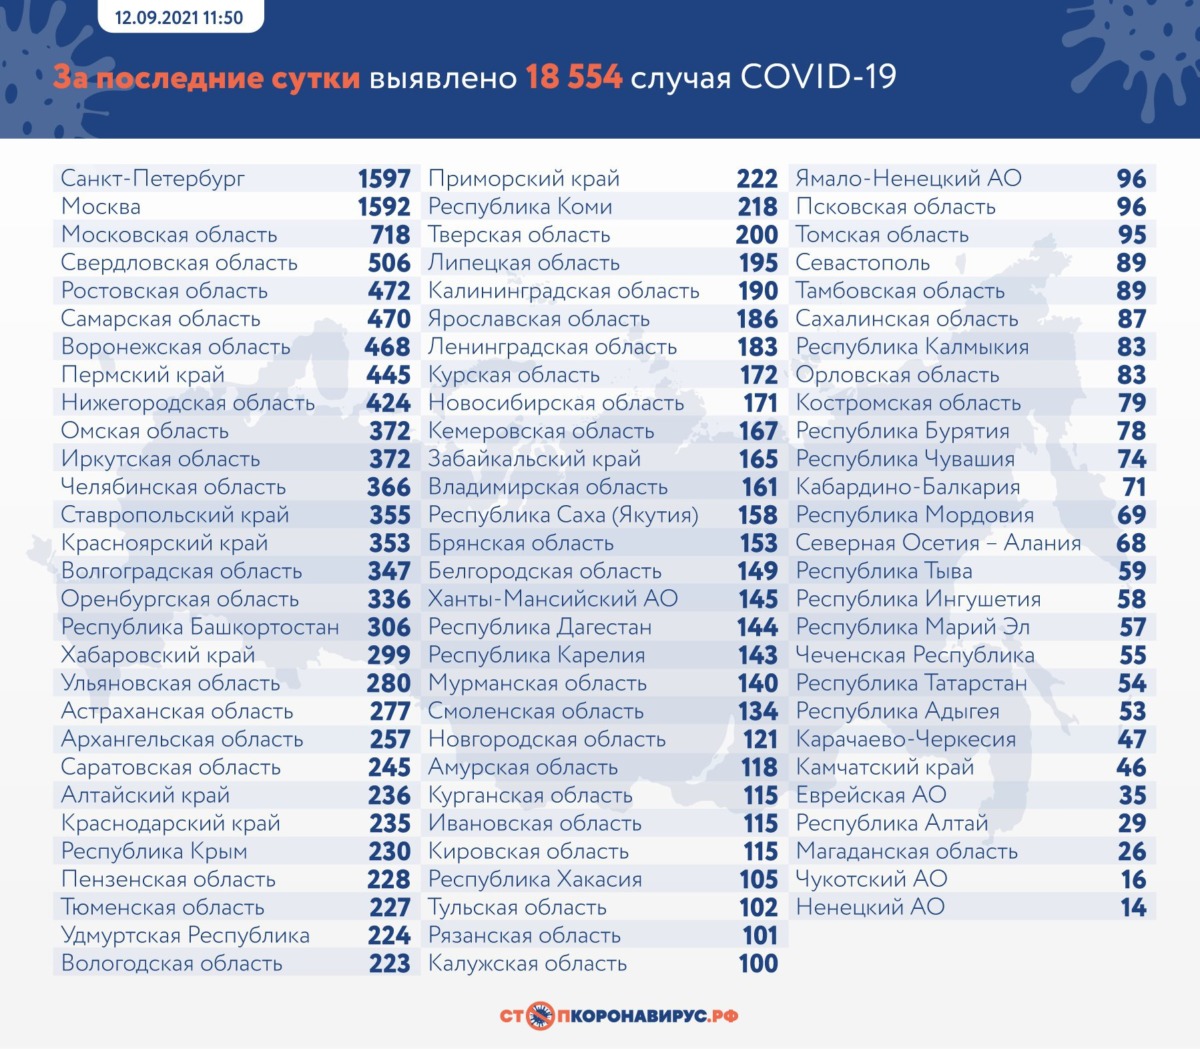 Статистика коронавируса в России на 12 сентября